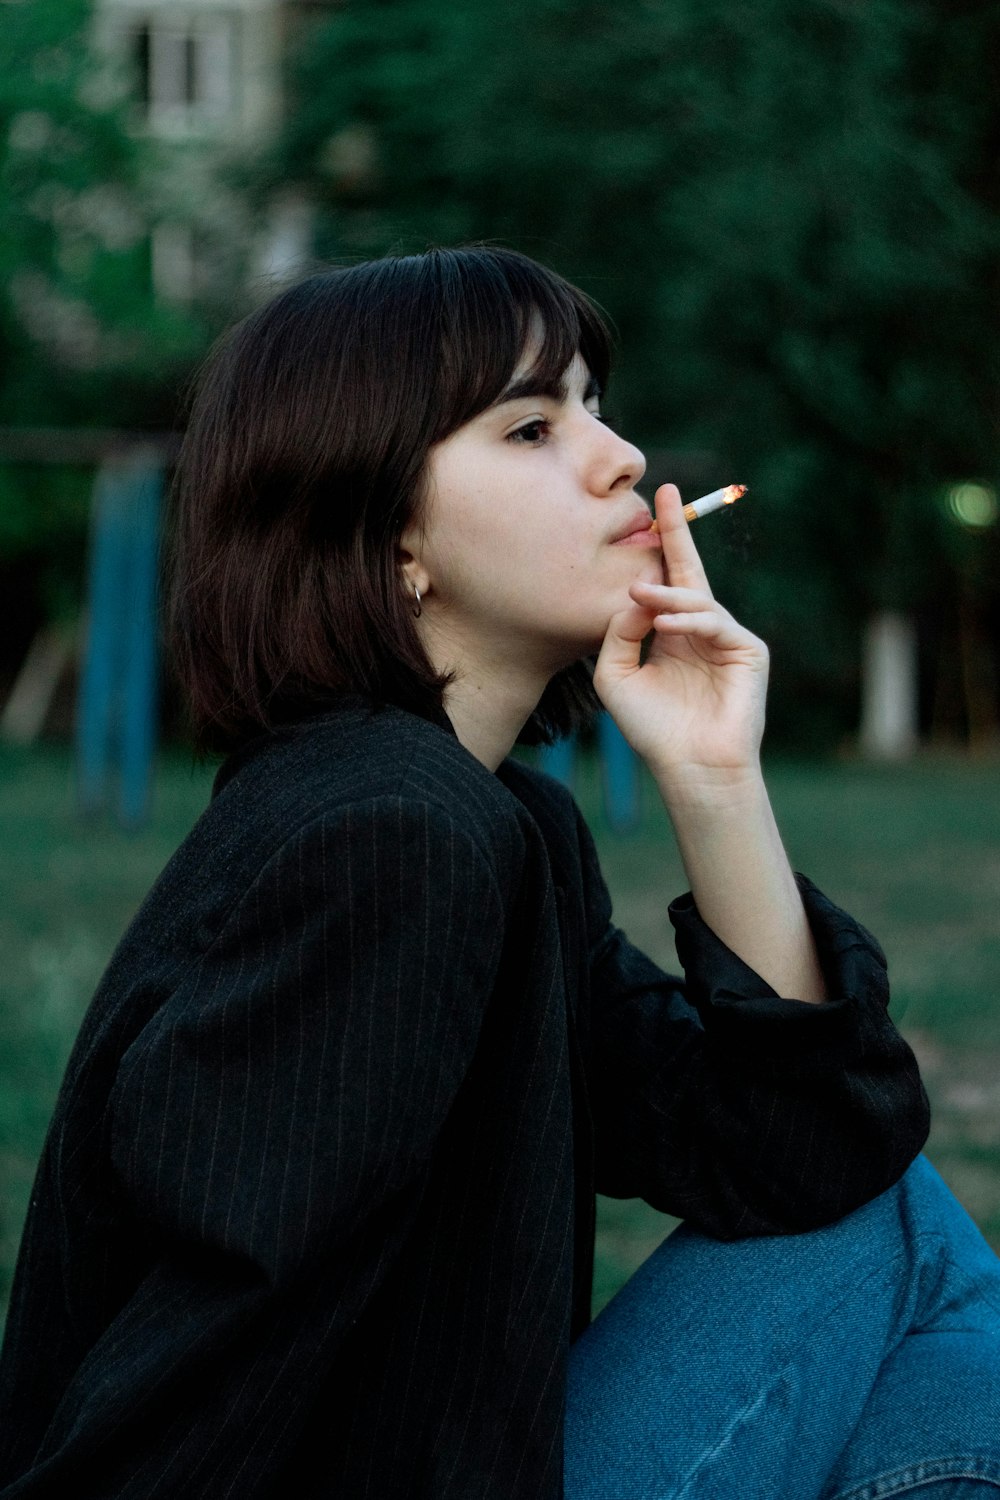 woman in black long sleeve shirt smoking cigarette